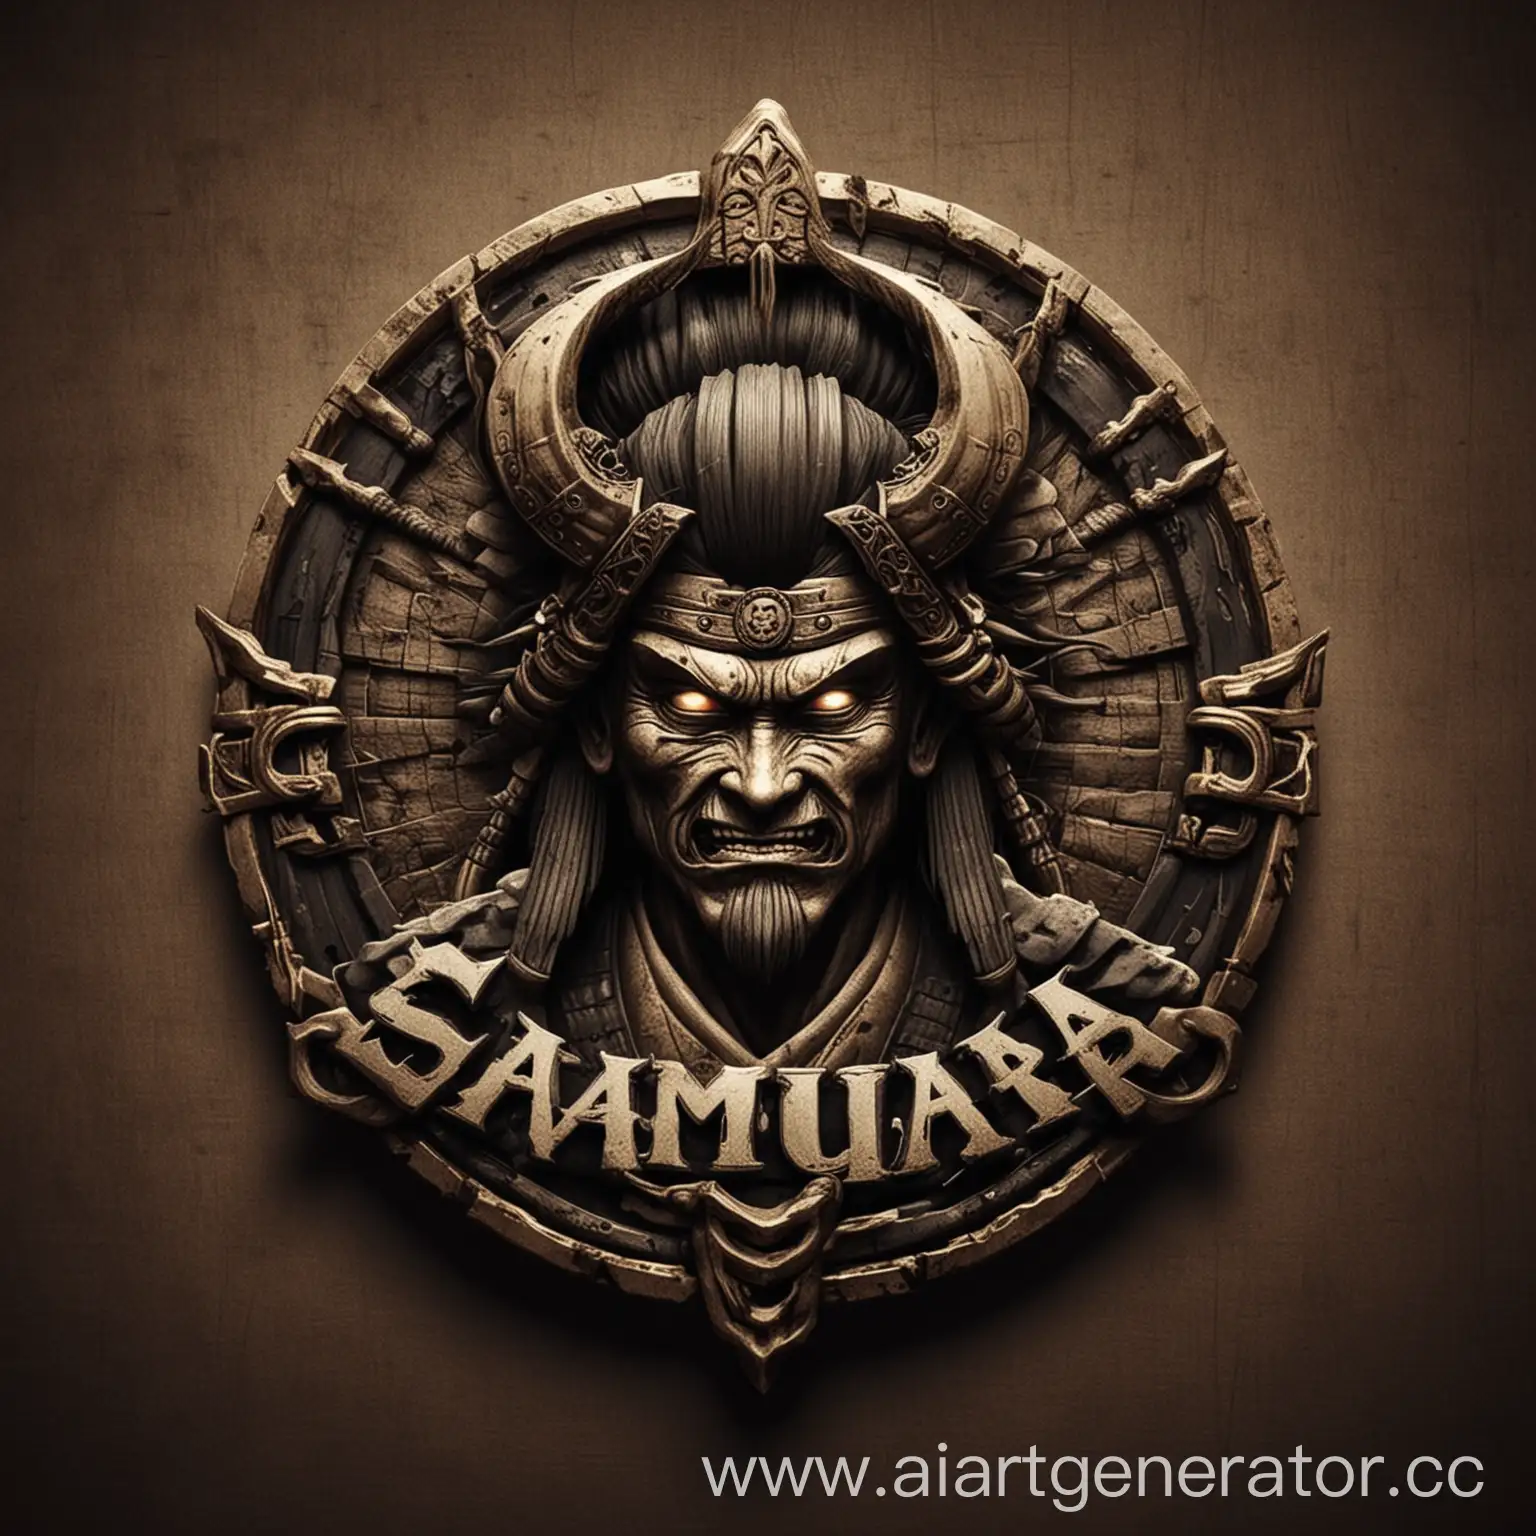 Bold-Samurai-Emblem-in-Fiery-Red-and-Black